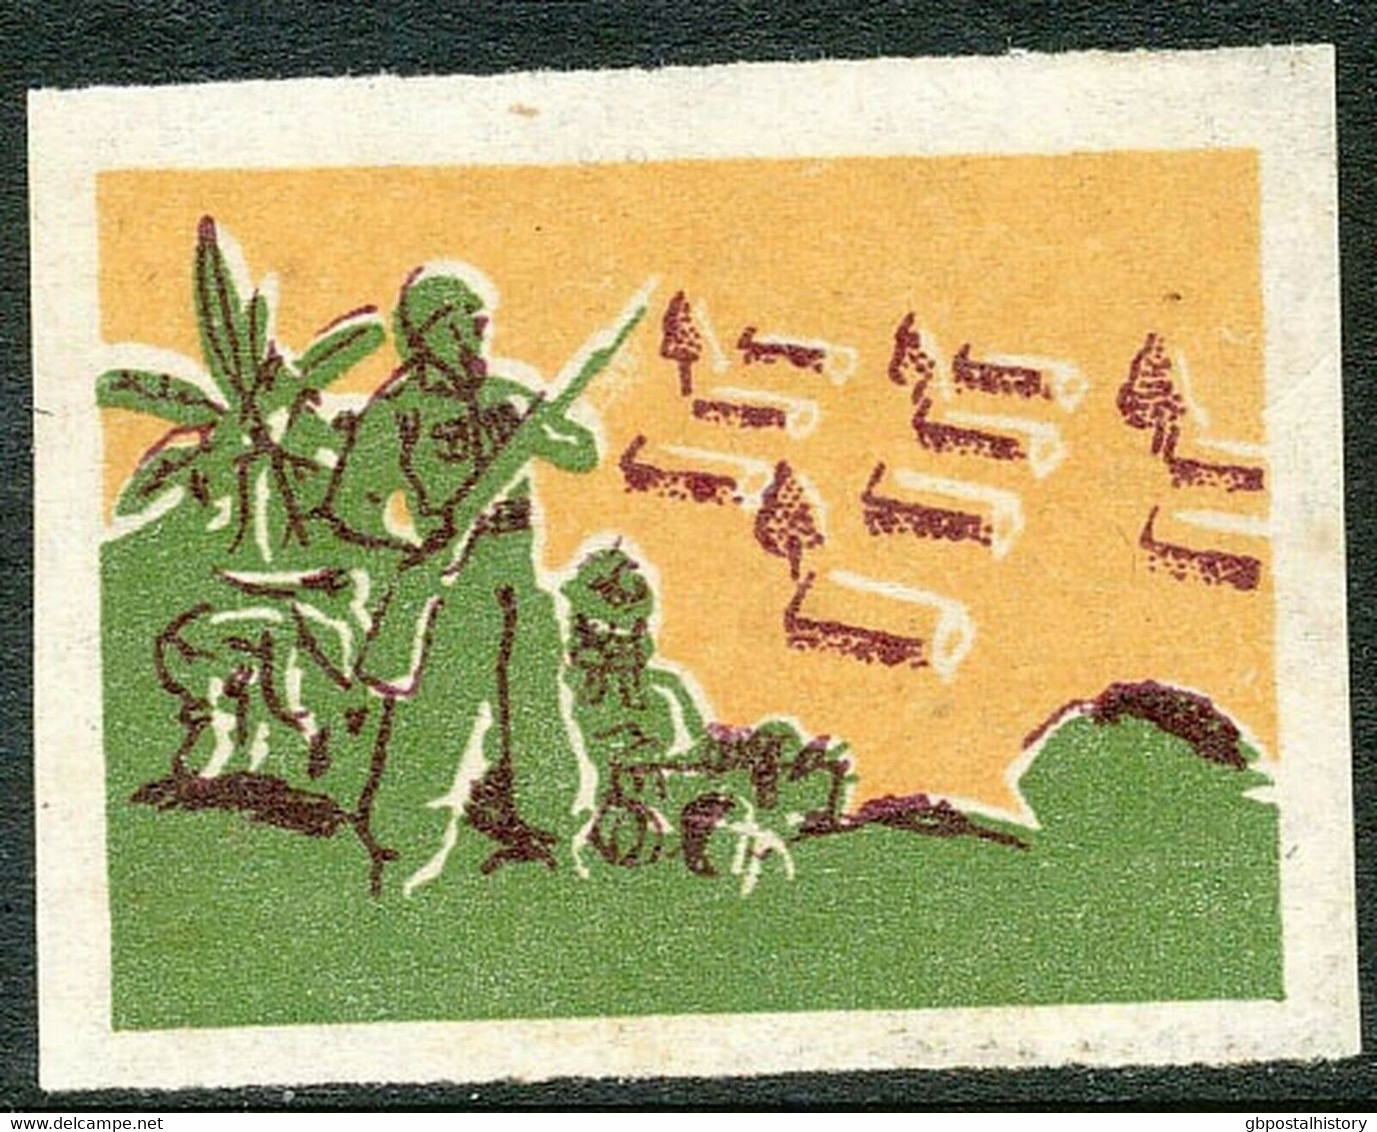 SOUTH VIETNAM 1960 Military Post Admission Stamp U/M VARIETY MISSING COLOR BLACK - Vietnam